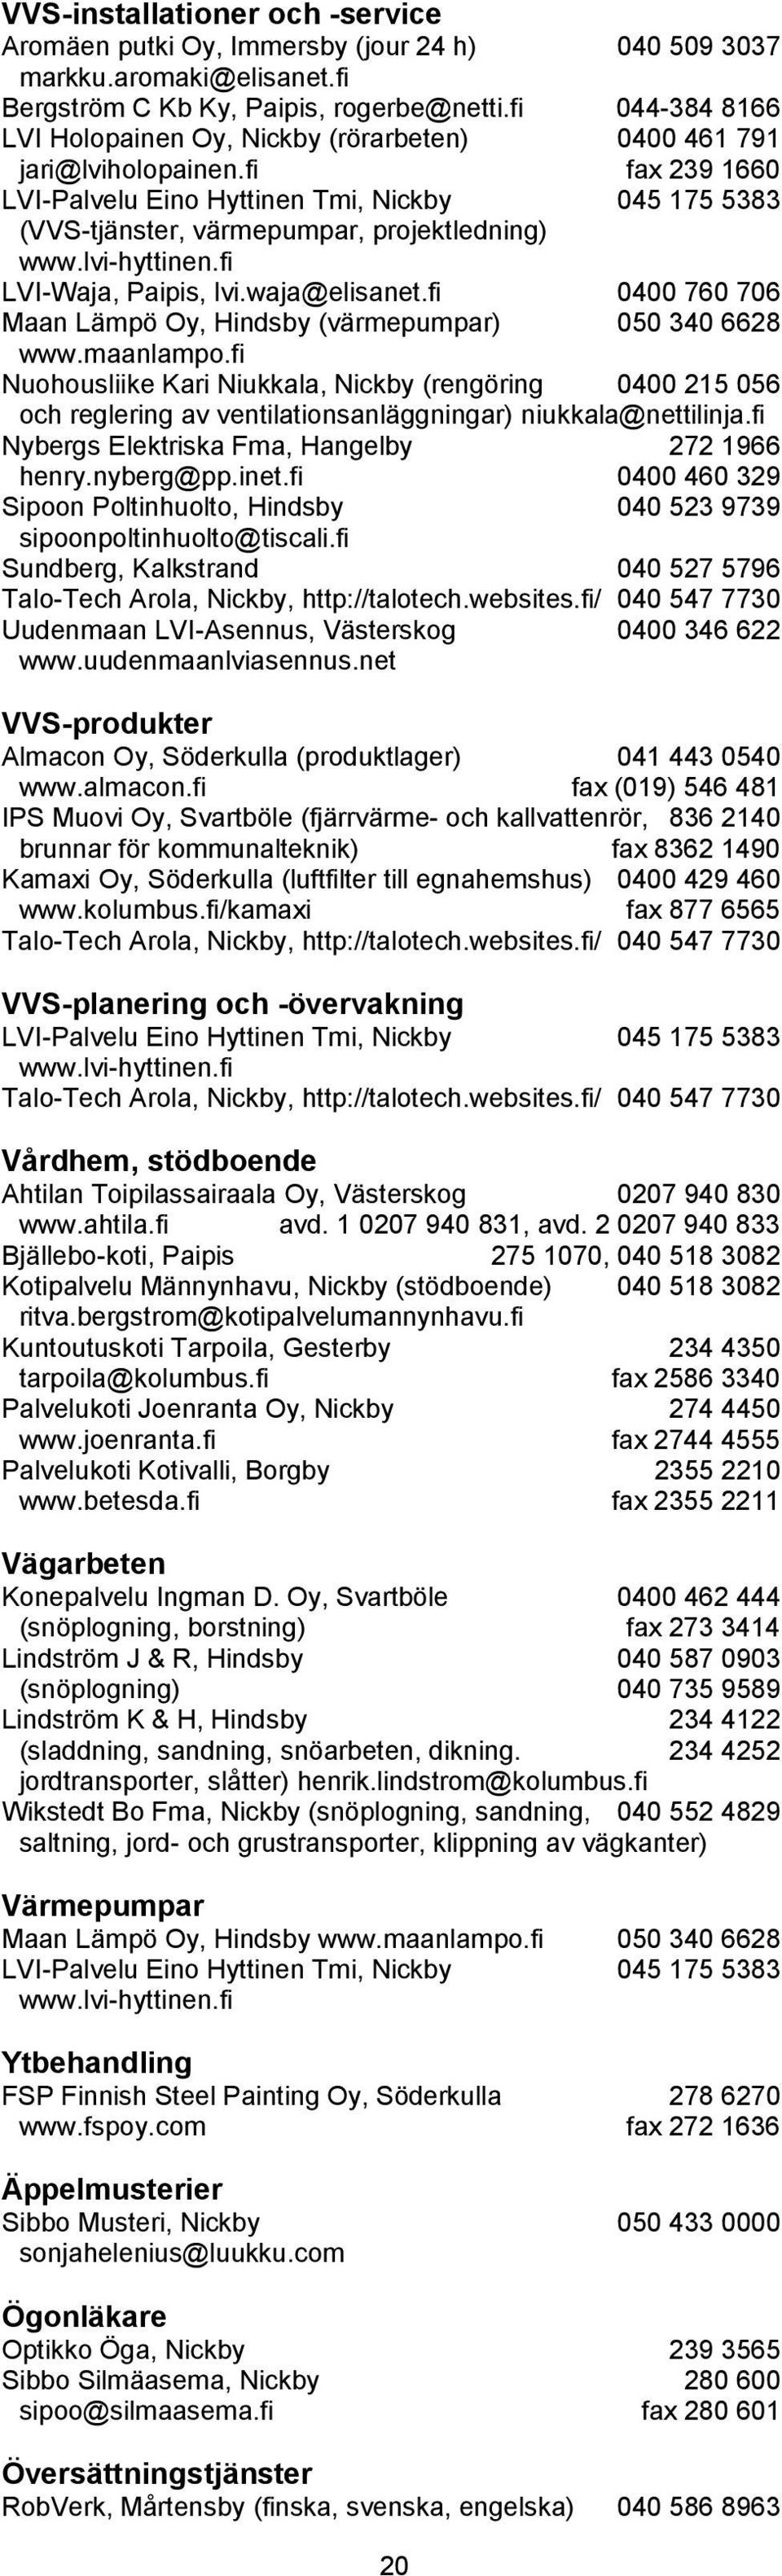 fi fax 239 1660 LVI-Palvelu Eino Hyttinen Tmi, Nickby 045 175 5383 (VVS-tjänster, värmepumpar, projektledning) www.lvi-hyttinen.fi LVI-Waja, Paipis, lvi.waja@elisanet.